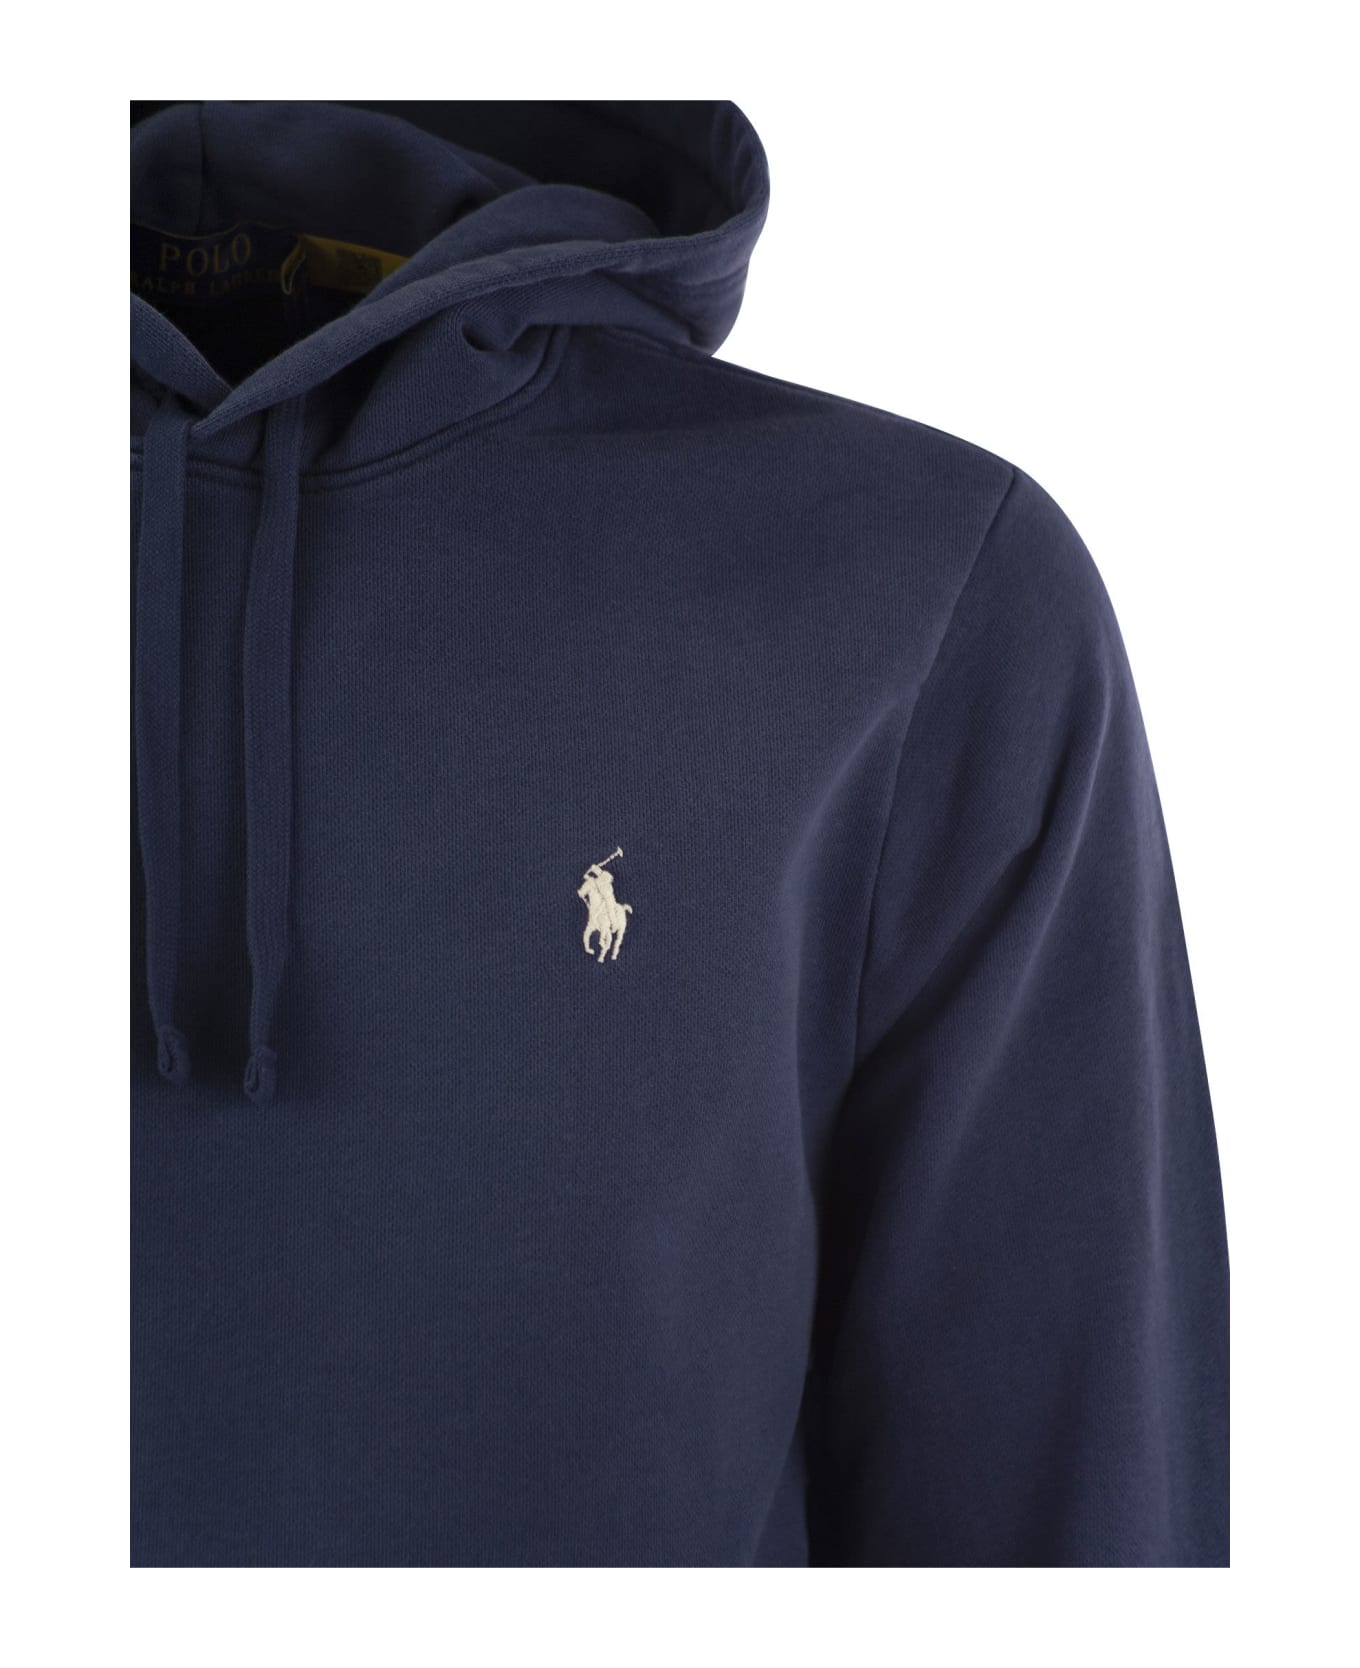 Polo Ralph Lauren Hooded Sweatshirt Rl - Navy